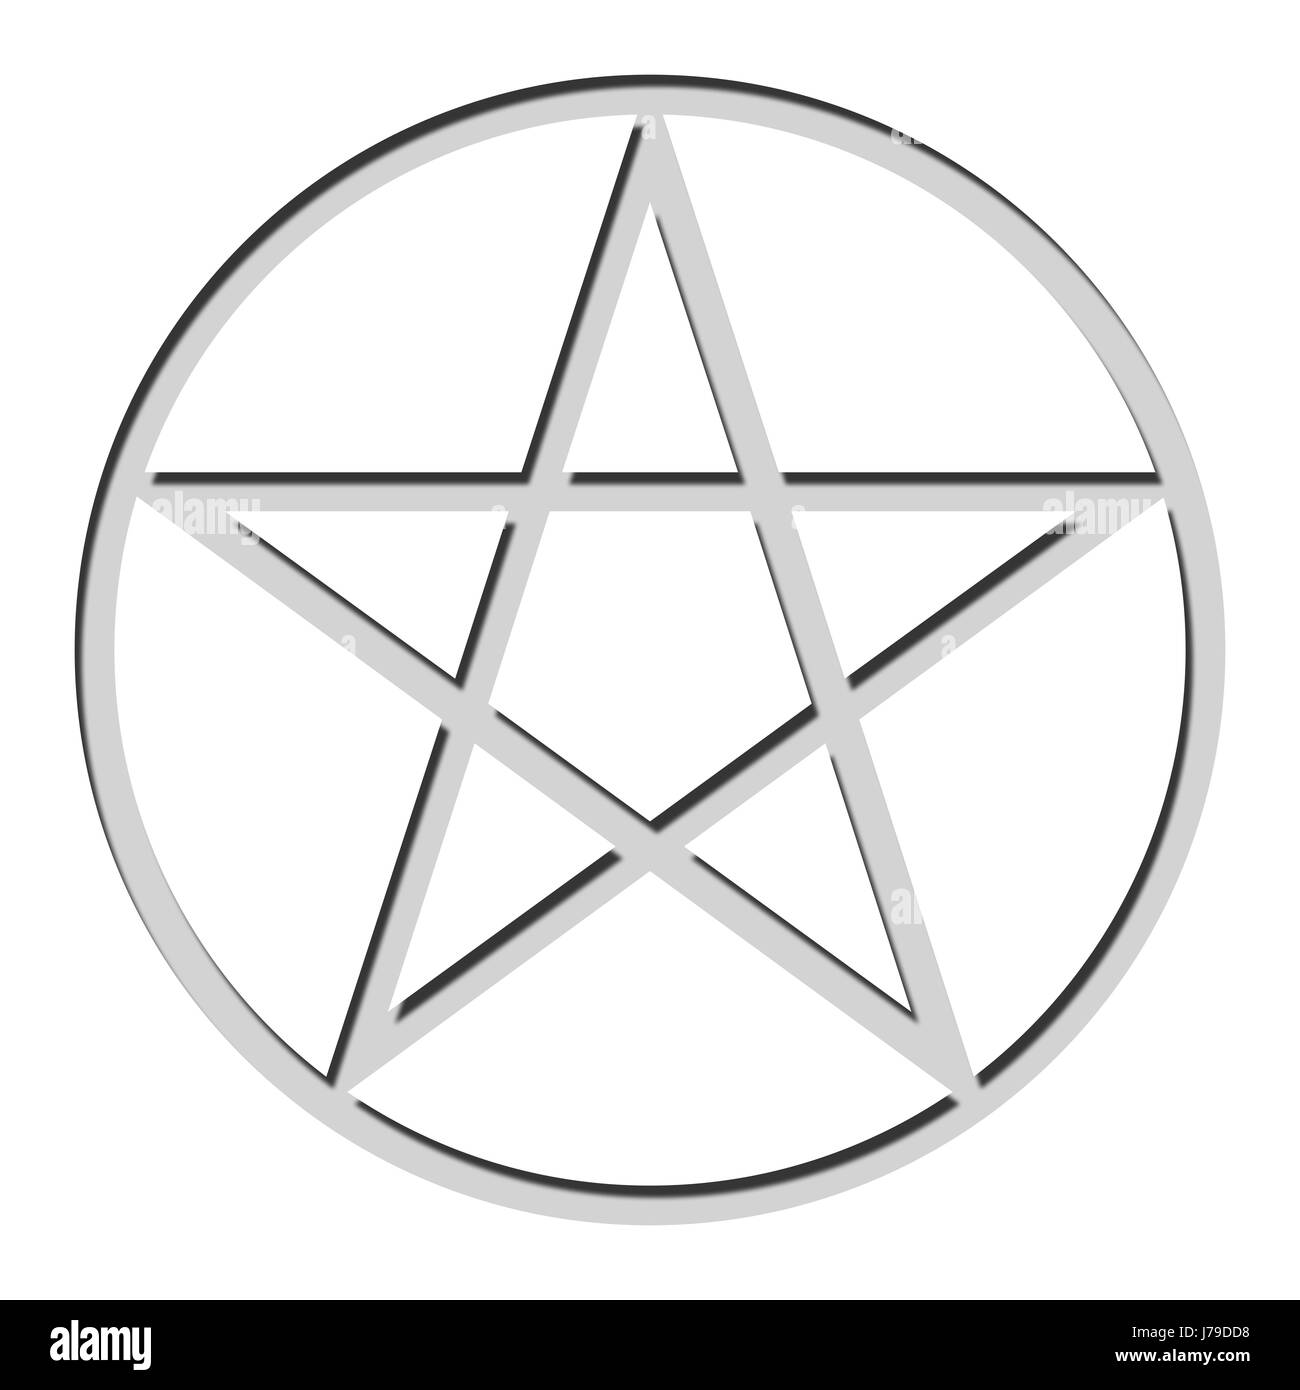 pentagram gray with shadow Stock Photo